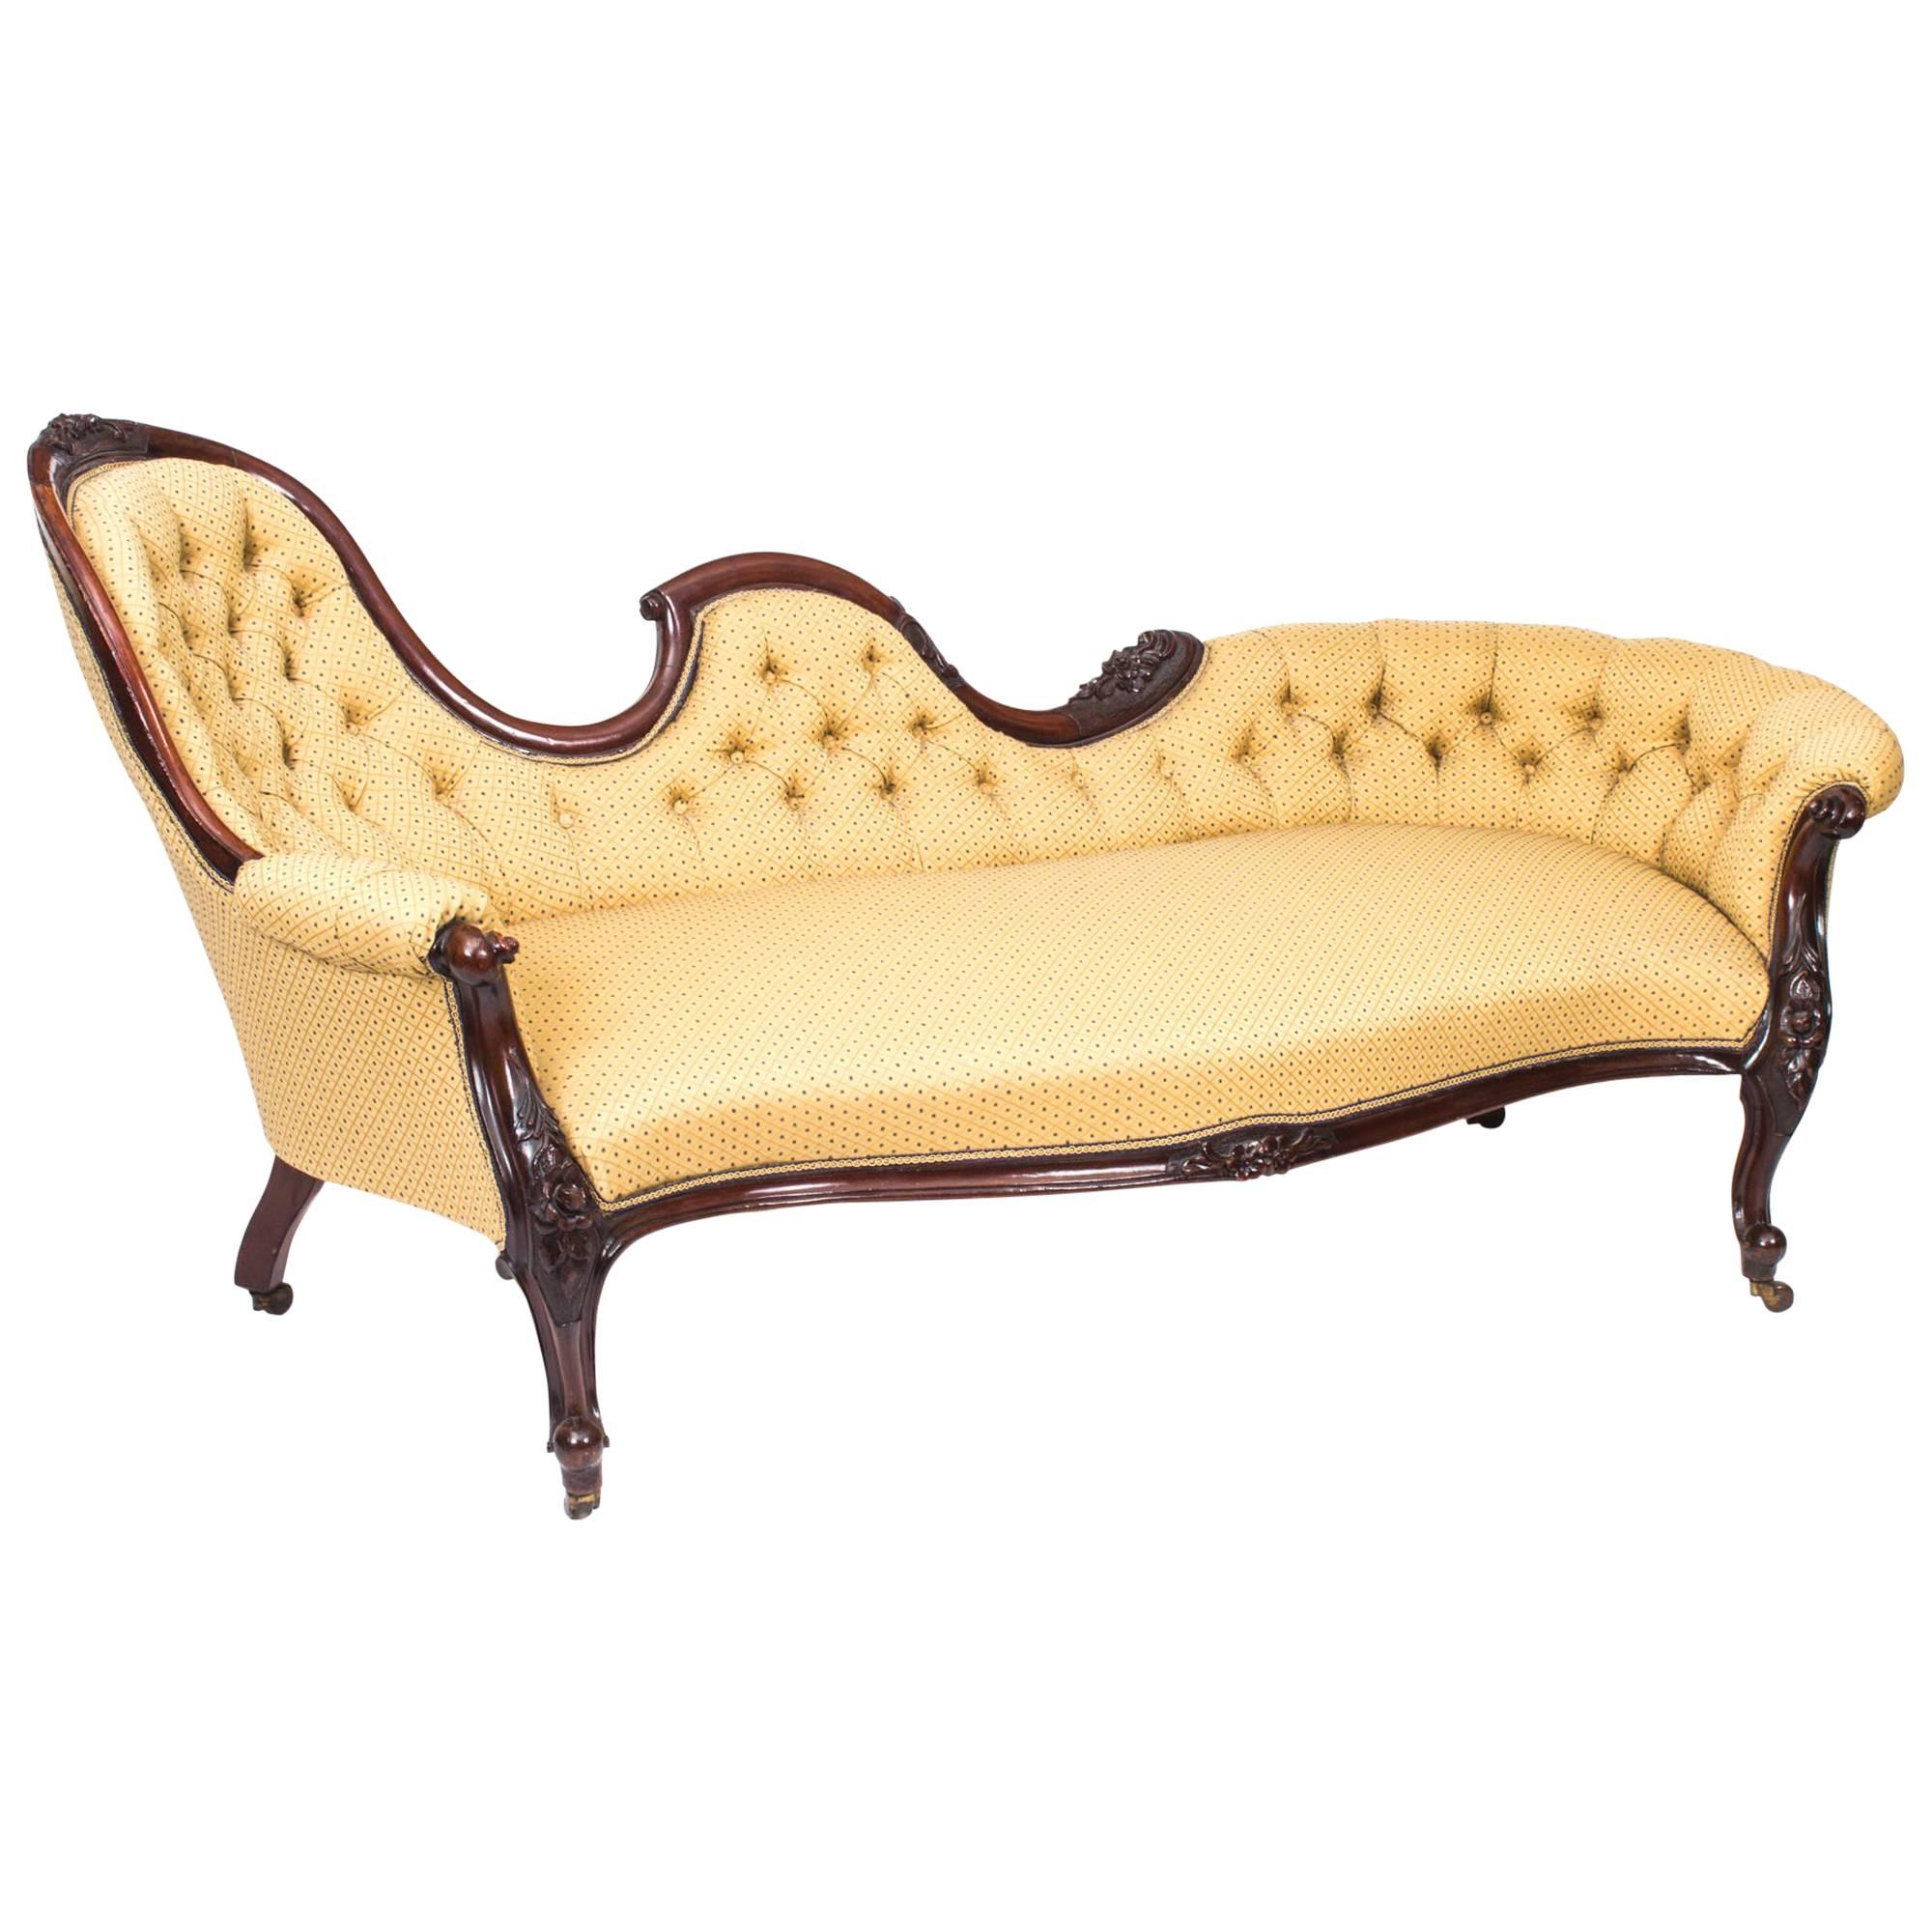 Antique Victorian Walnut Sofa Chaise Longue Settee, circa 1860